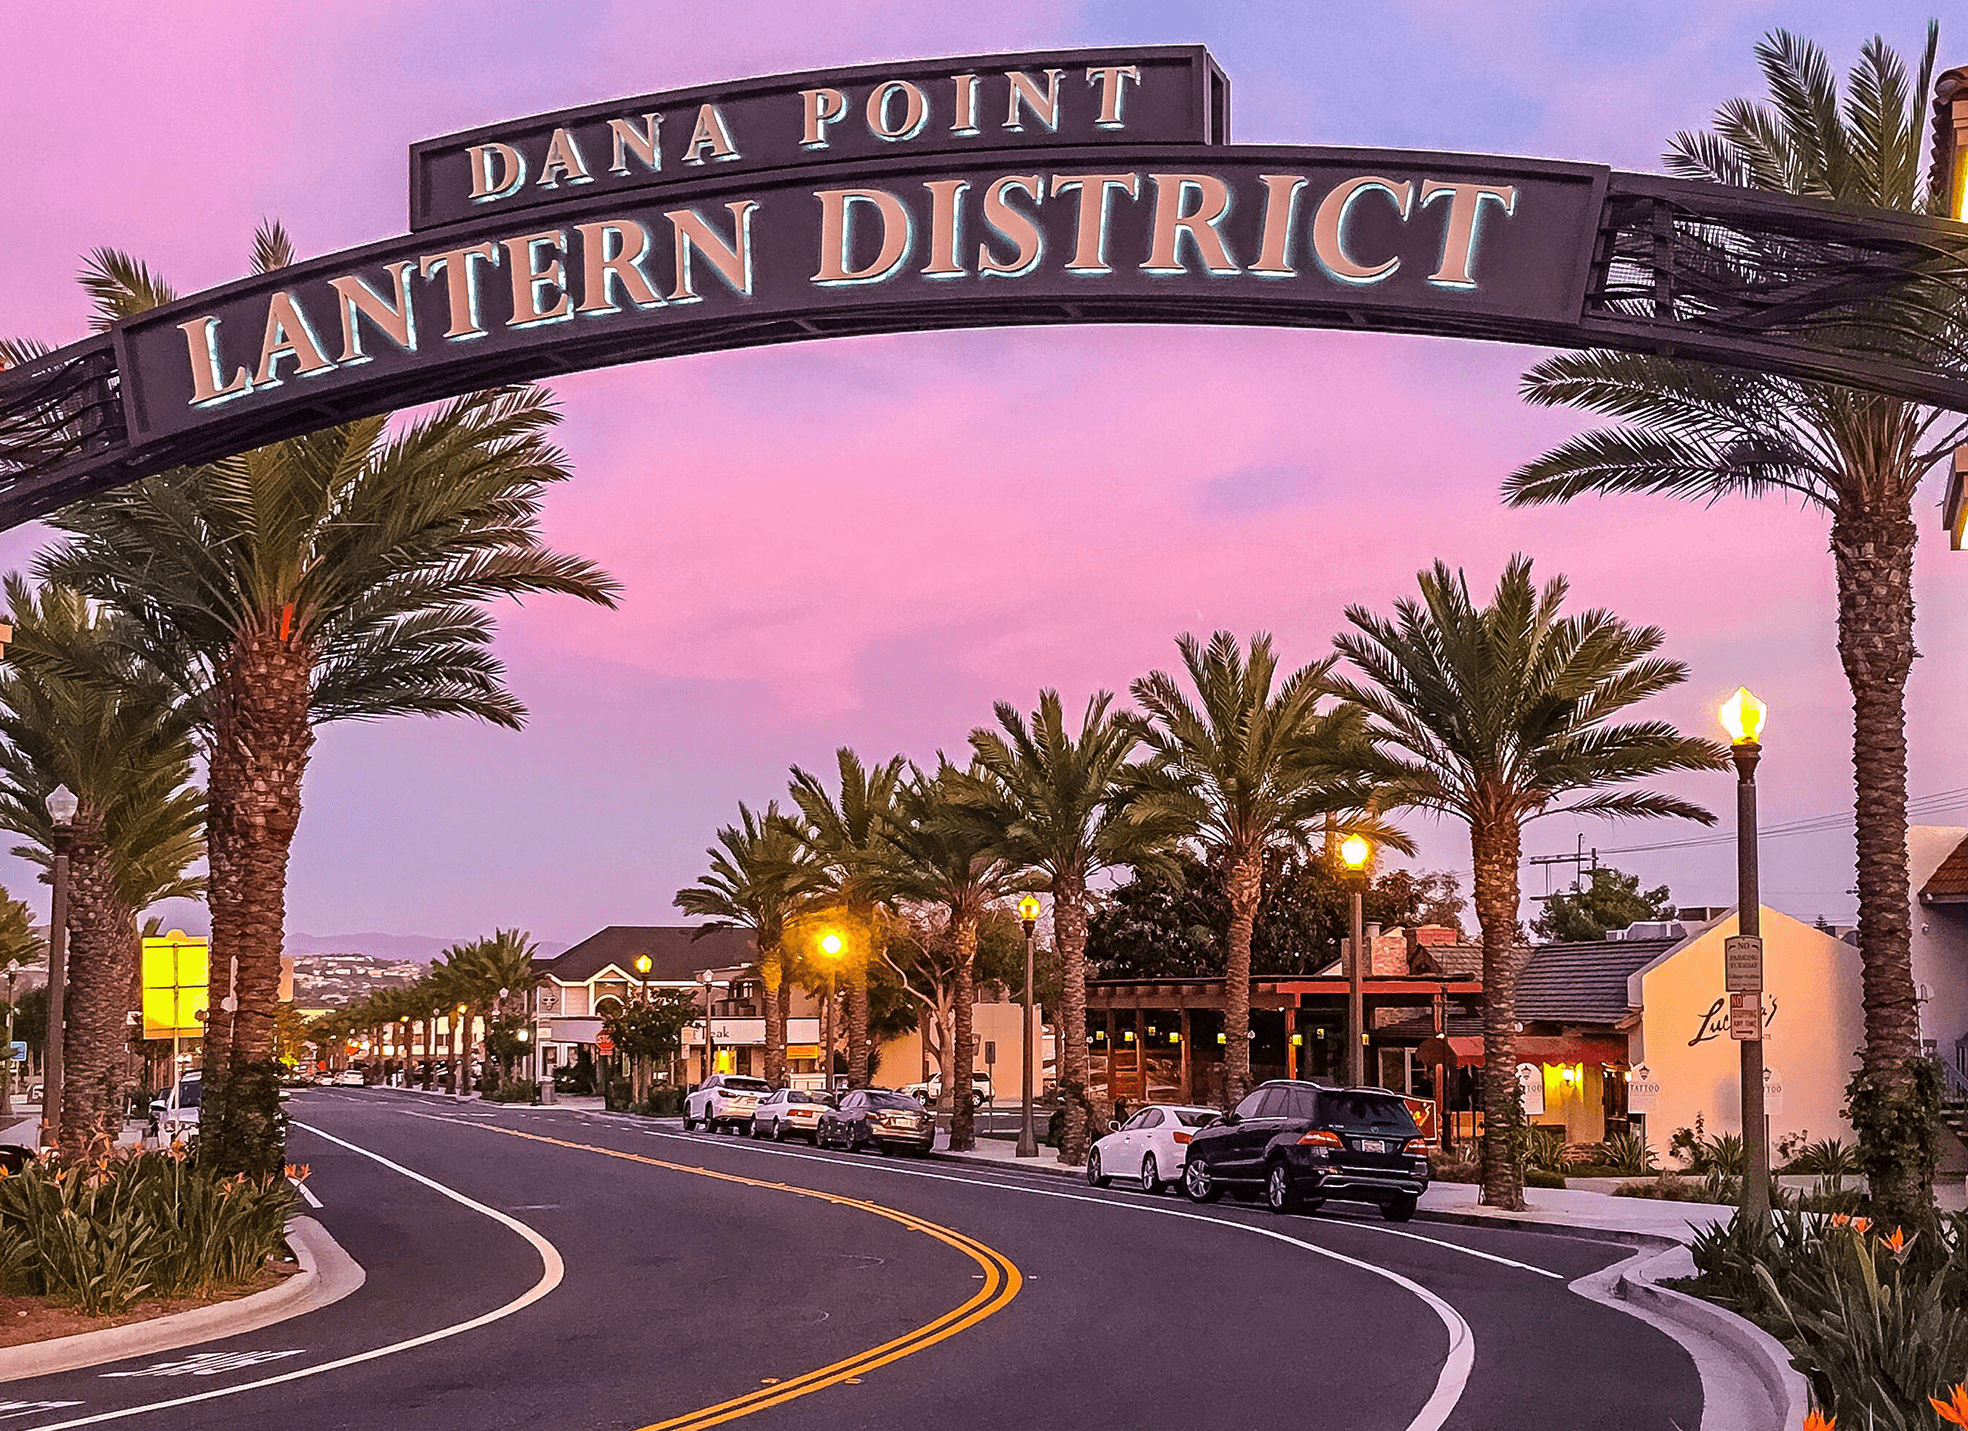 WestLAND's Group Urban Revitalization Image - Shows Dana Point Lantern District signage.